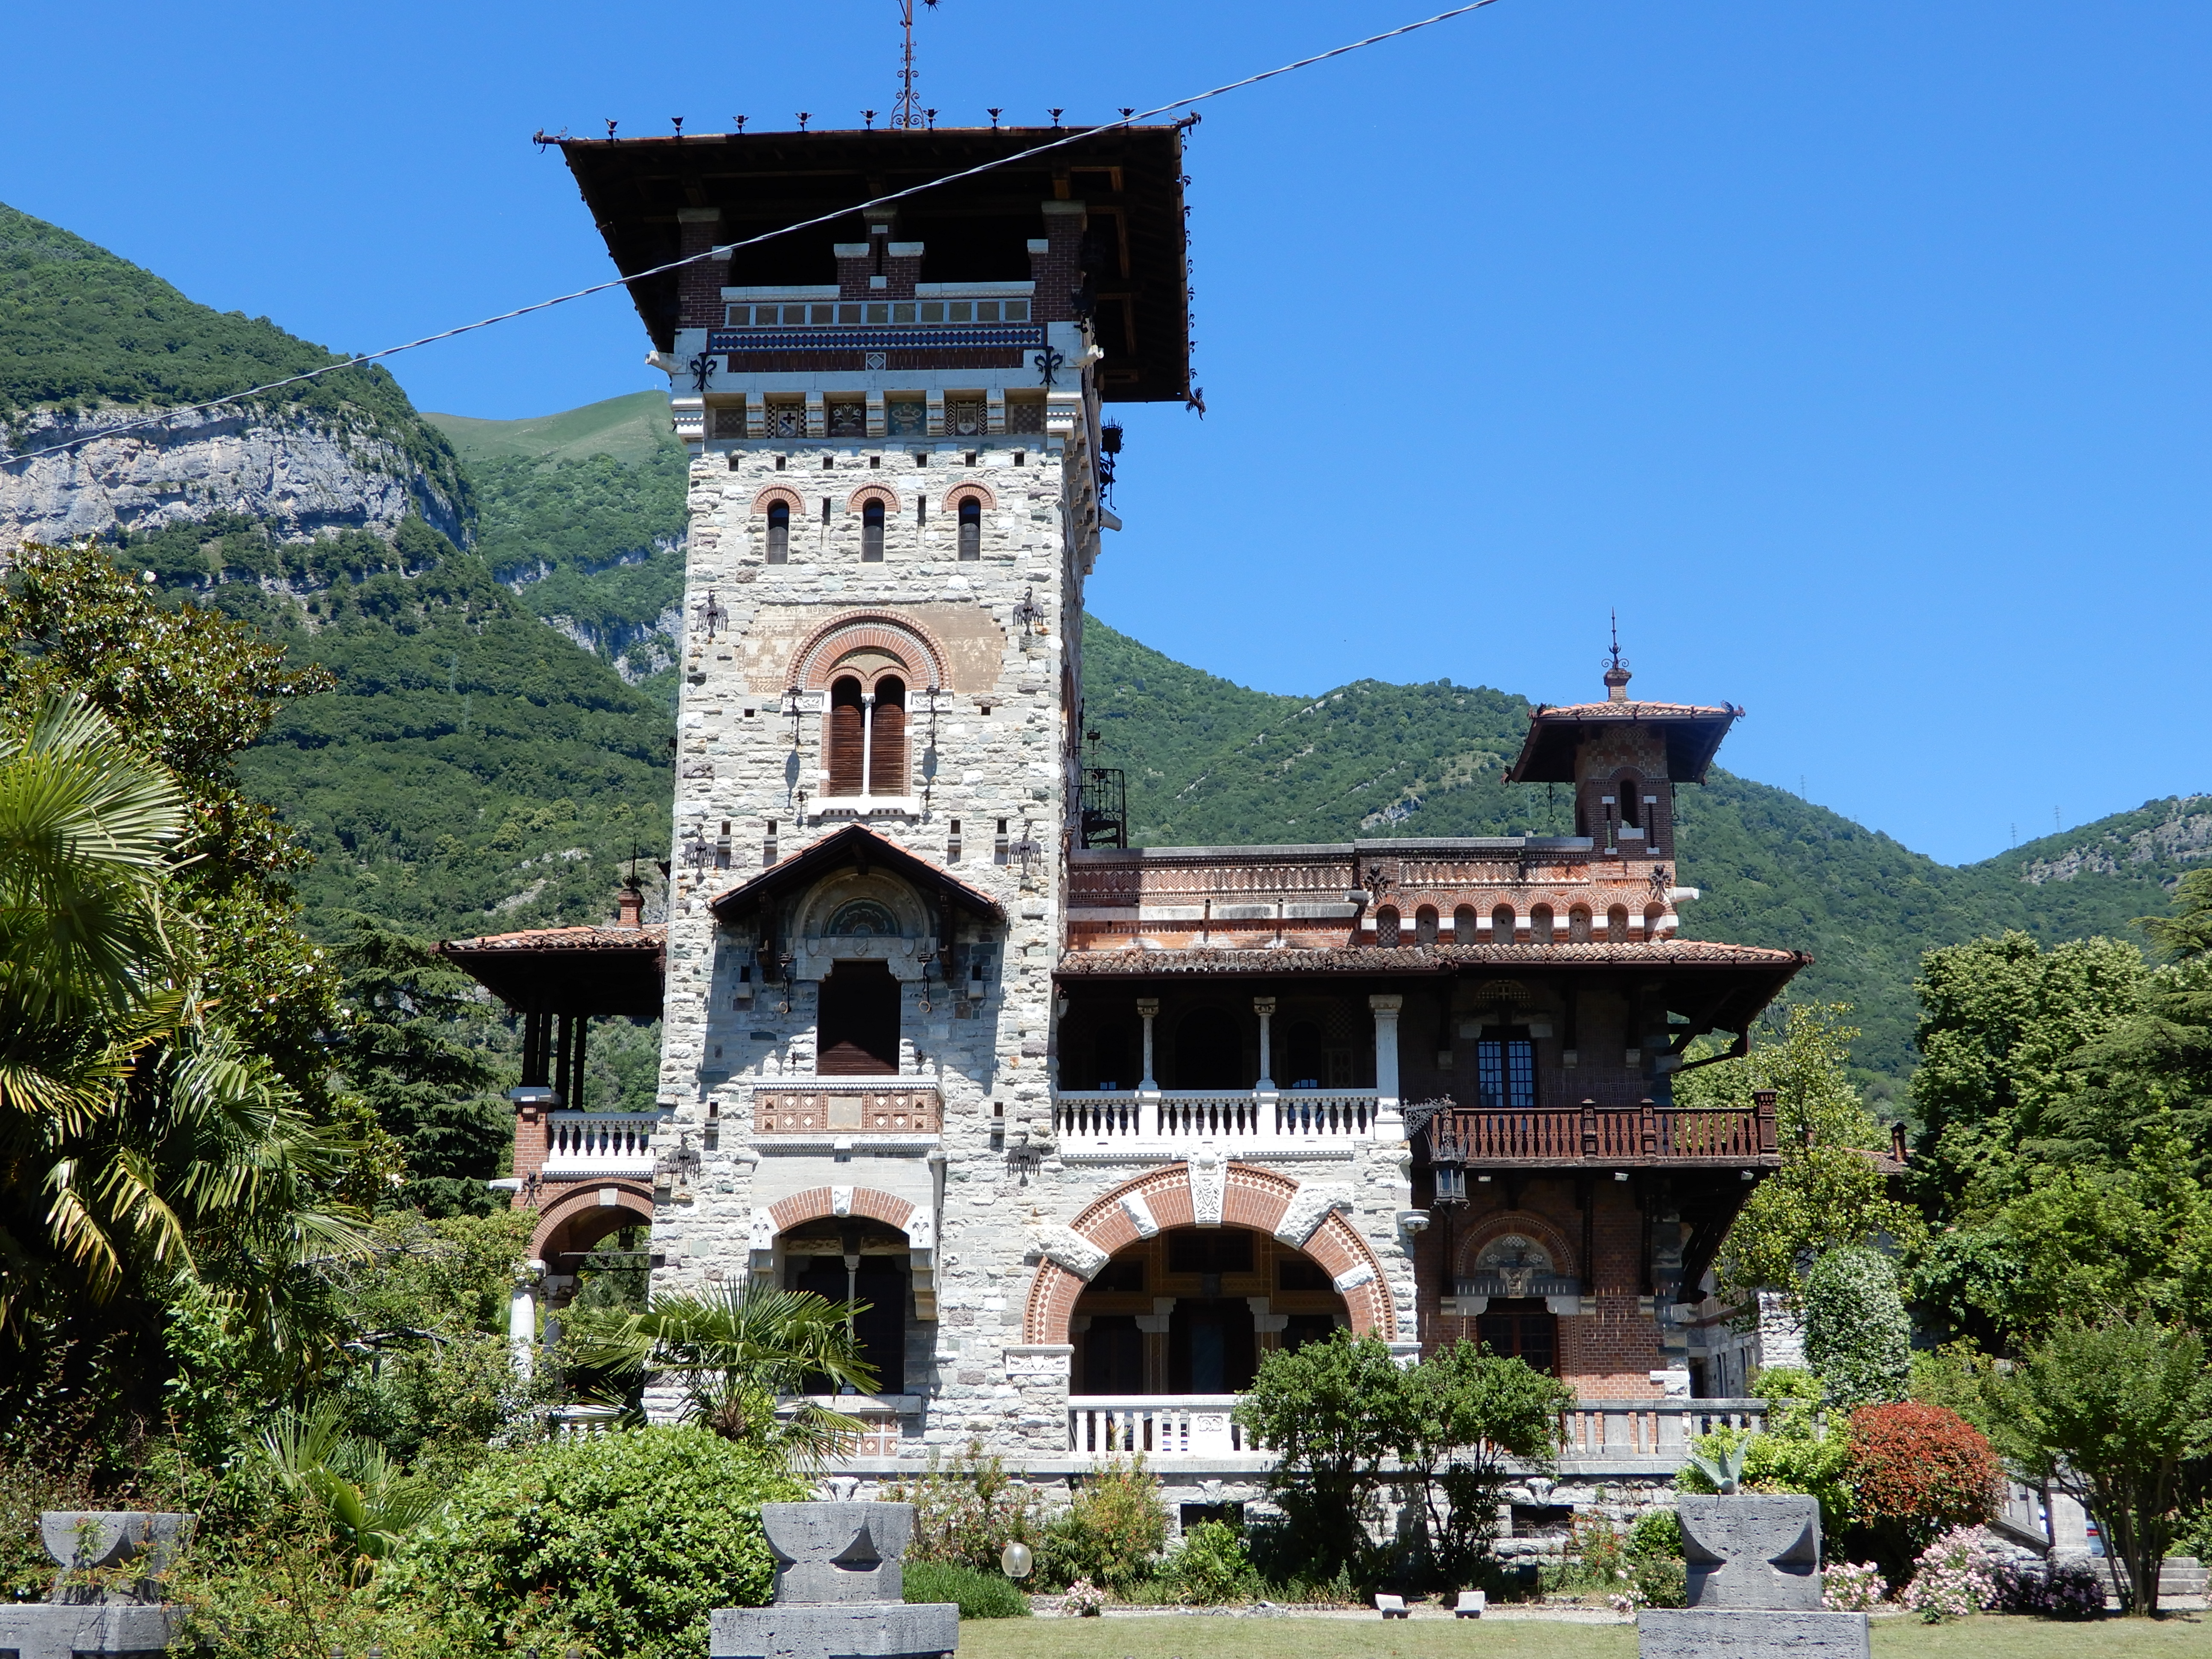 Villa Pessina - Wikipedia